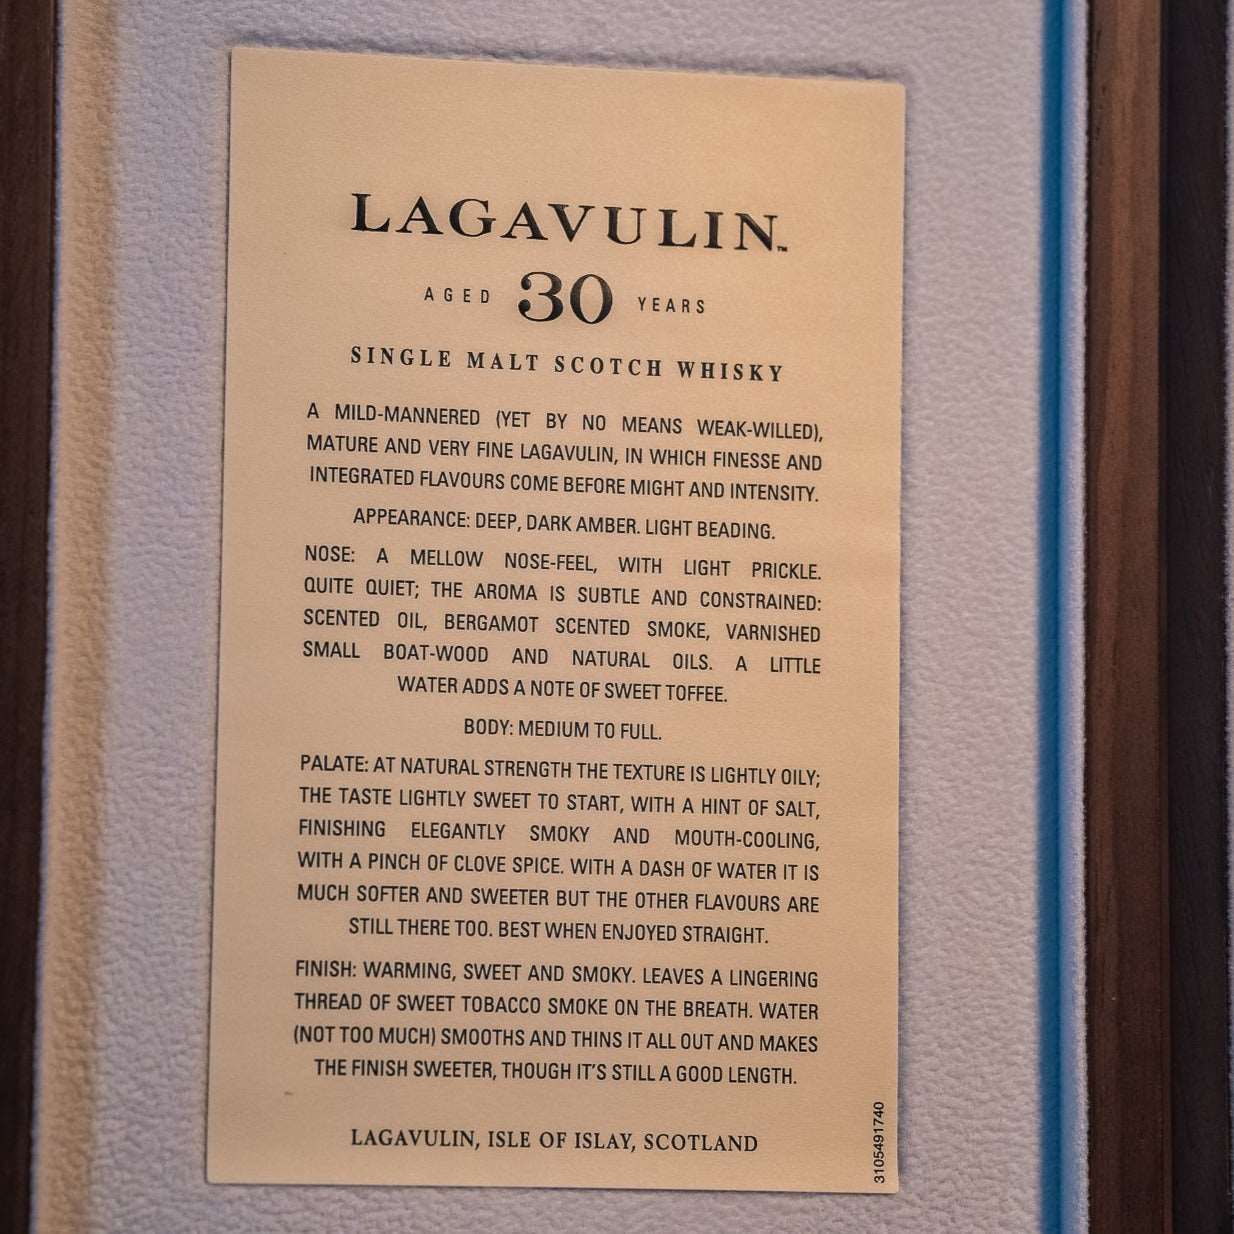 Lagavulin | 30 Jahre | 1991/2022 | Cask of Distinction #5403 | 0,7l | 44,3%GET A BOTTLE